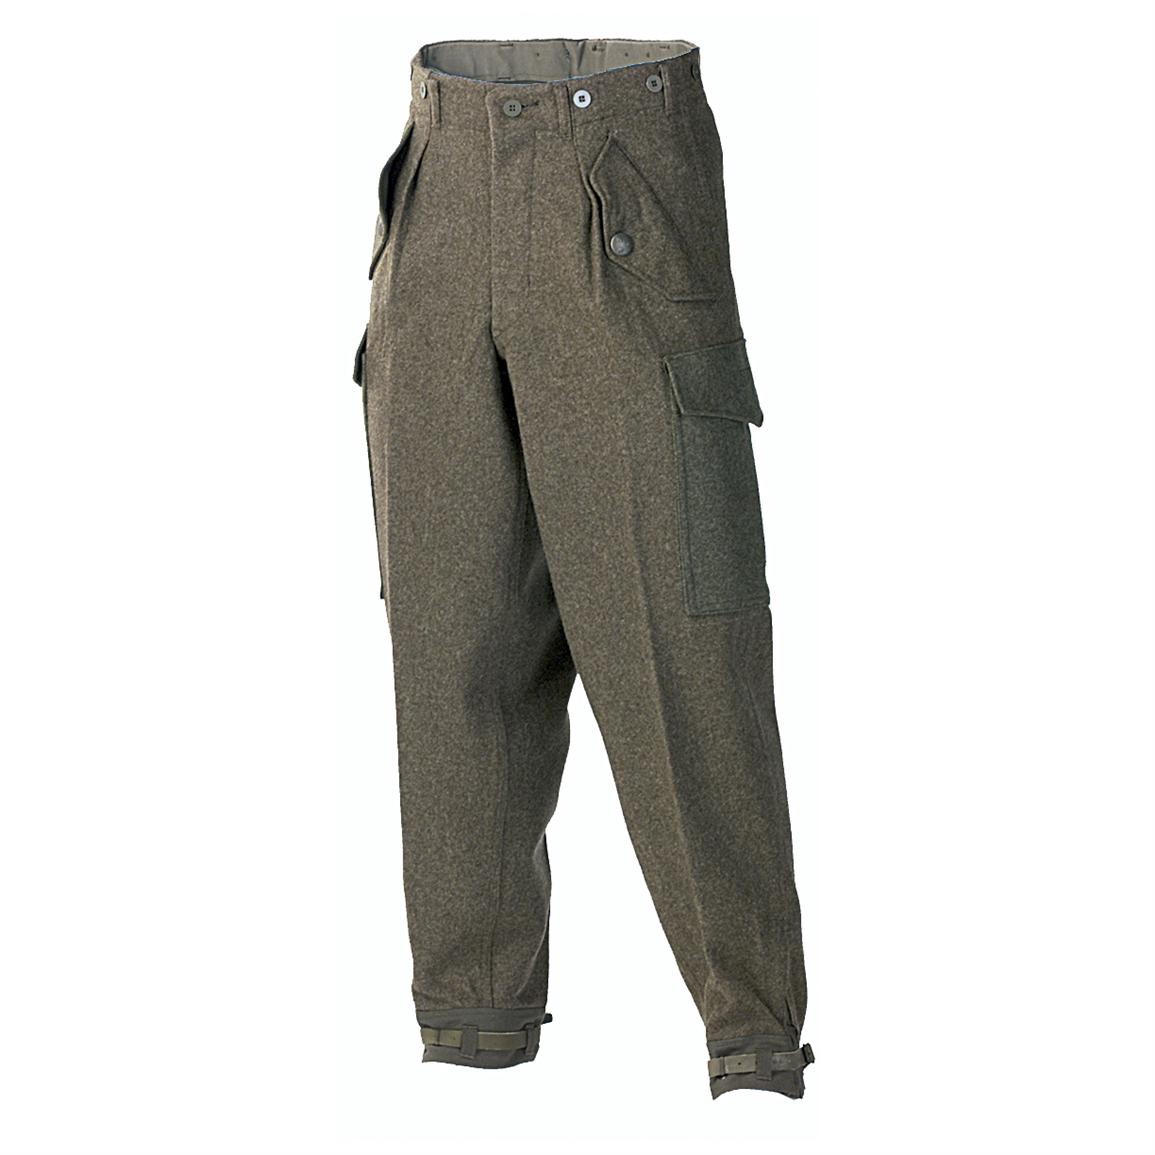 New Swedish Military Wool Pants - 149553, Pants at Sportsman's Guide